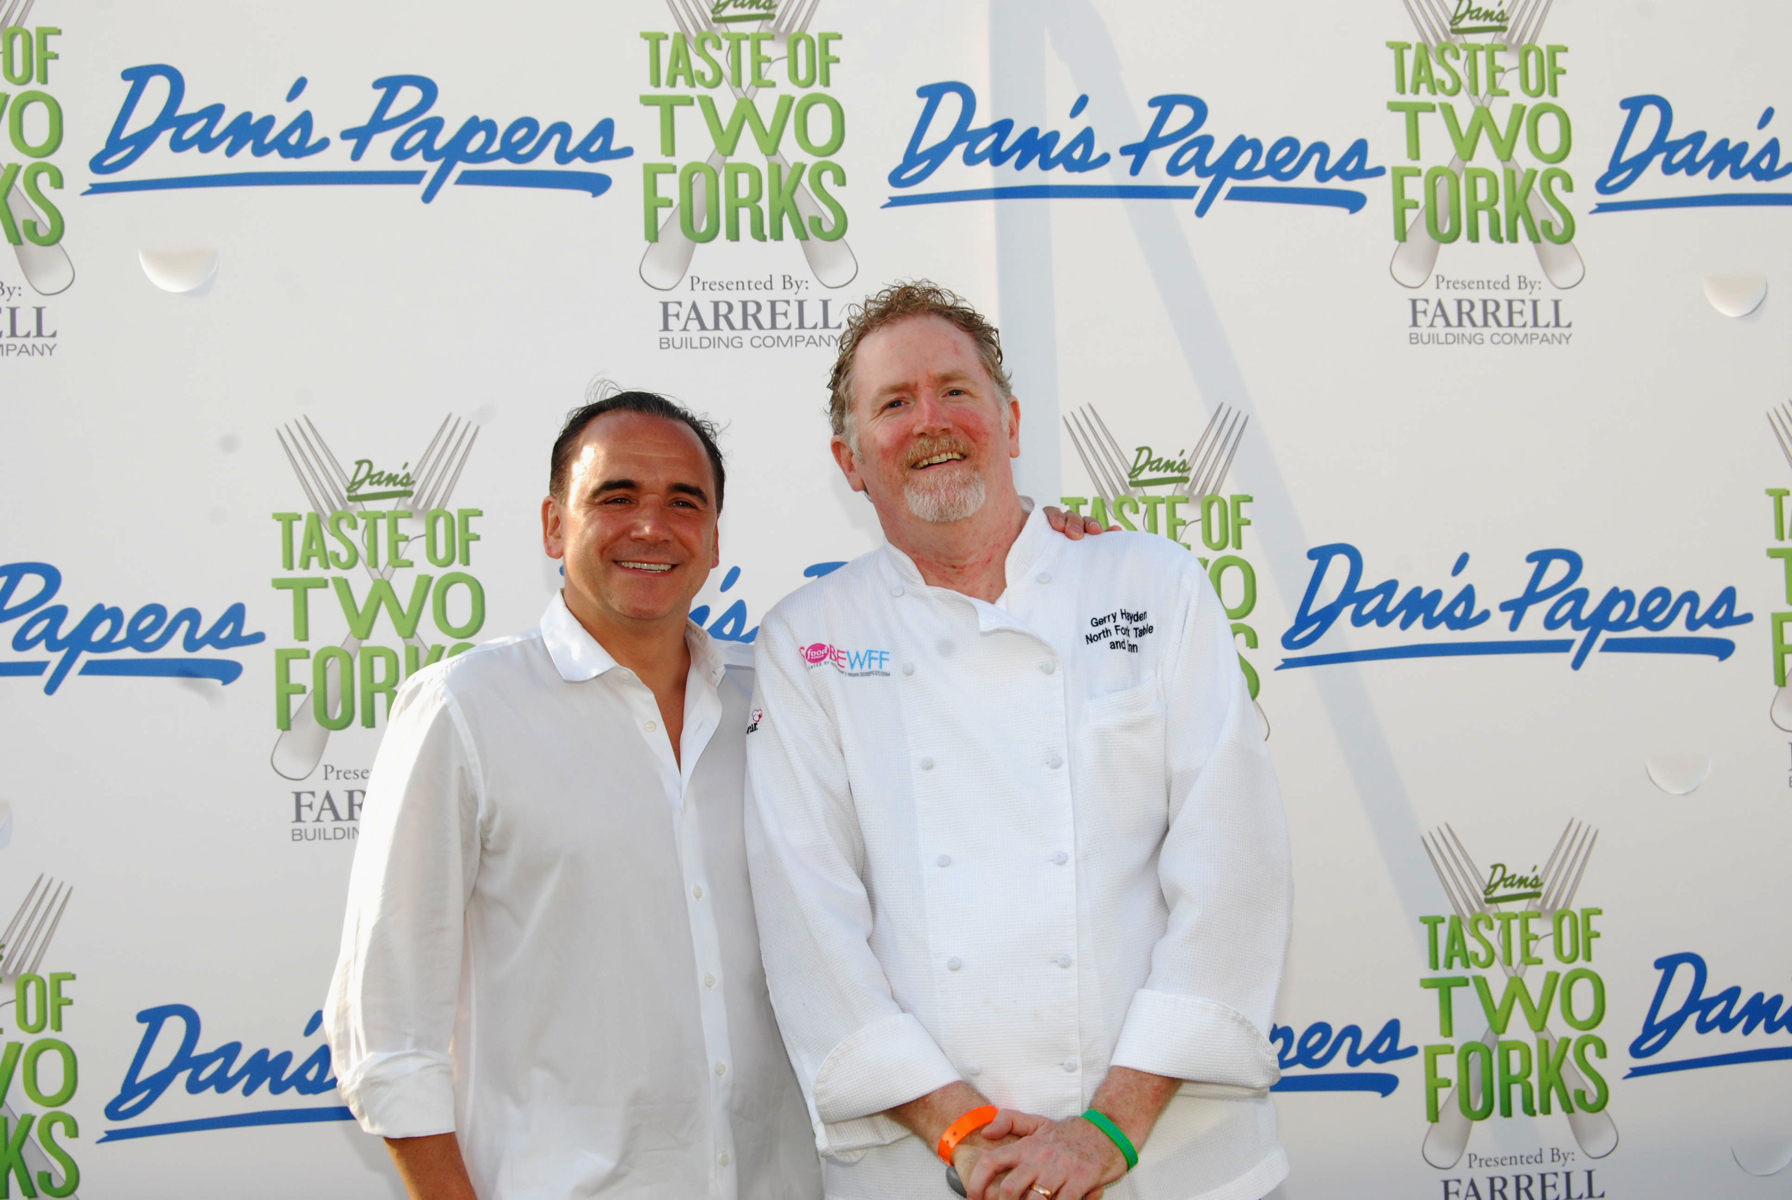 Chef and host Jean-Georges Vongerichten and Two Forks Outstanding Achievement Award recipient Chef Gerry Hayden